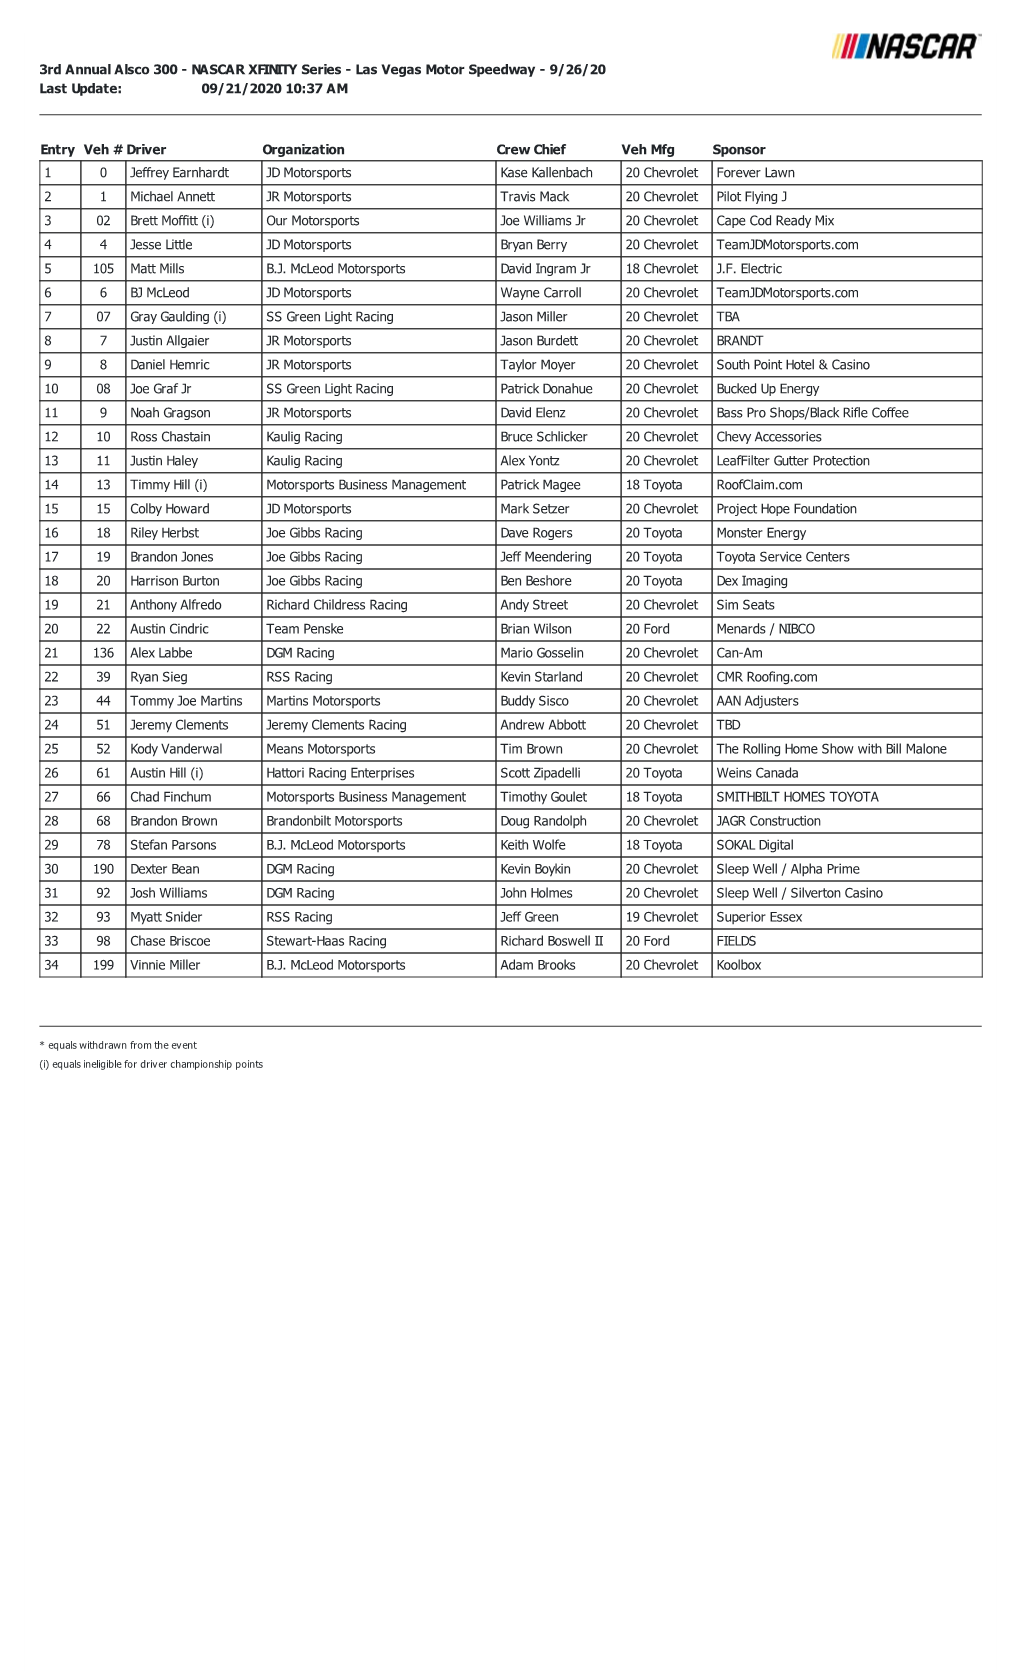 3Rd Annual Alsco 300 - NASCAR XFINITY Series - Las Vegas Motor Speedway - 9/26/20 Last Update: 09/21/2020 10:37 AM